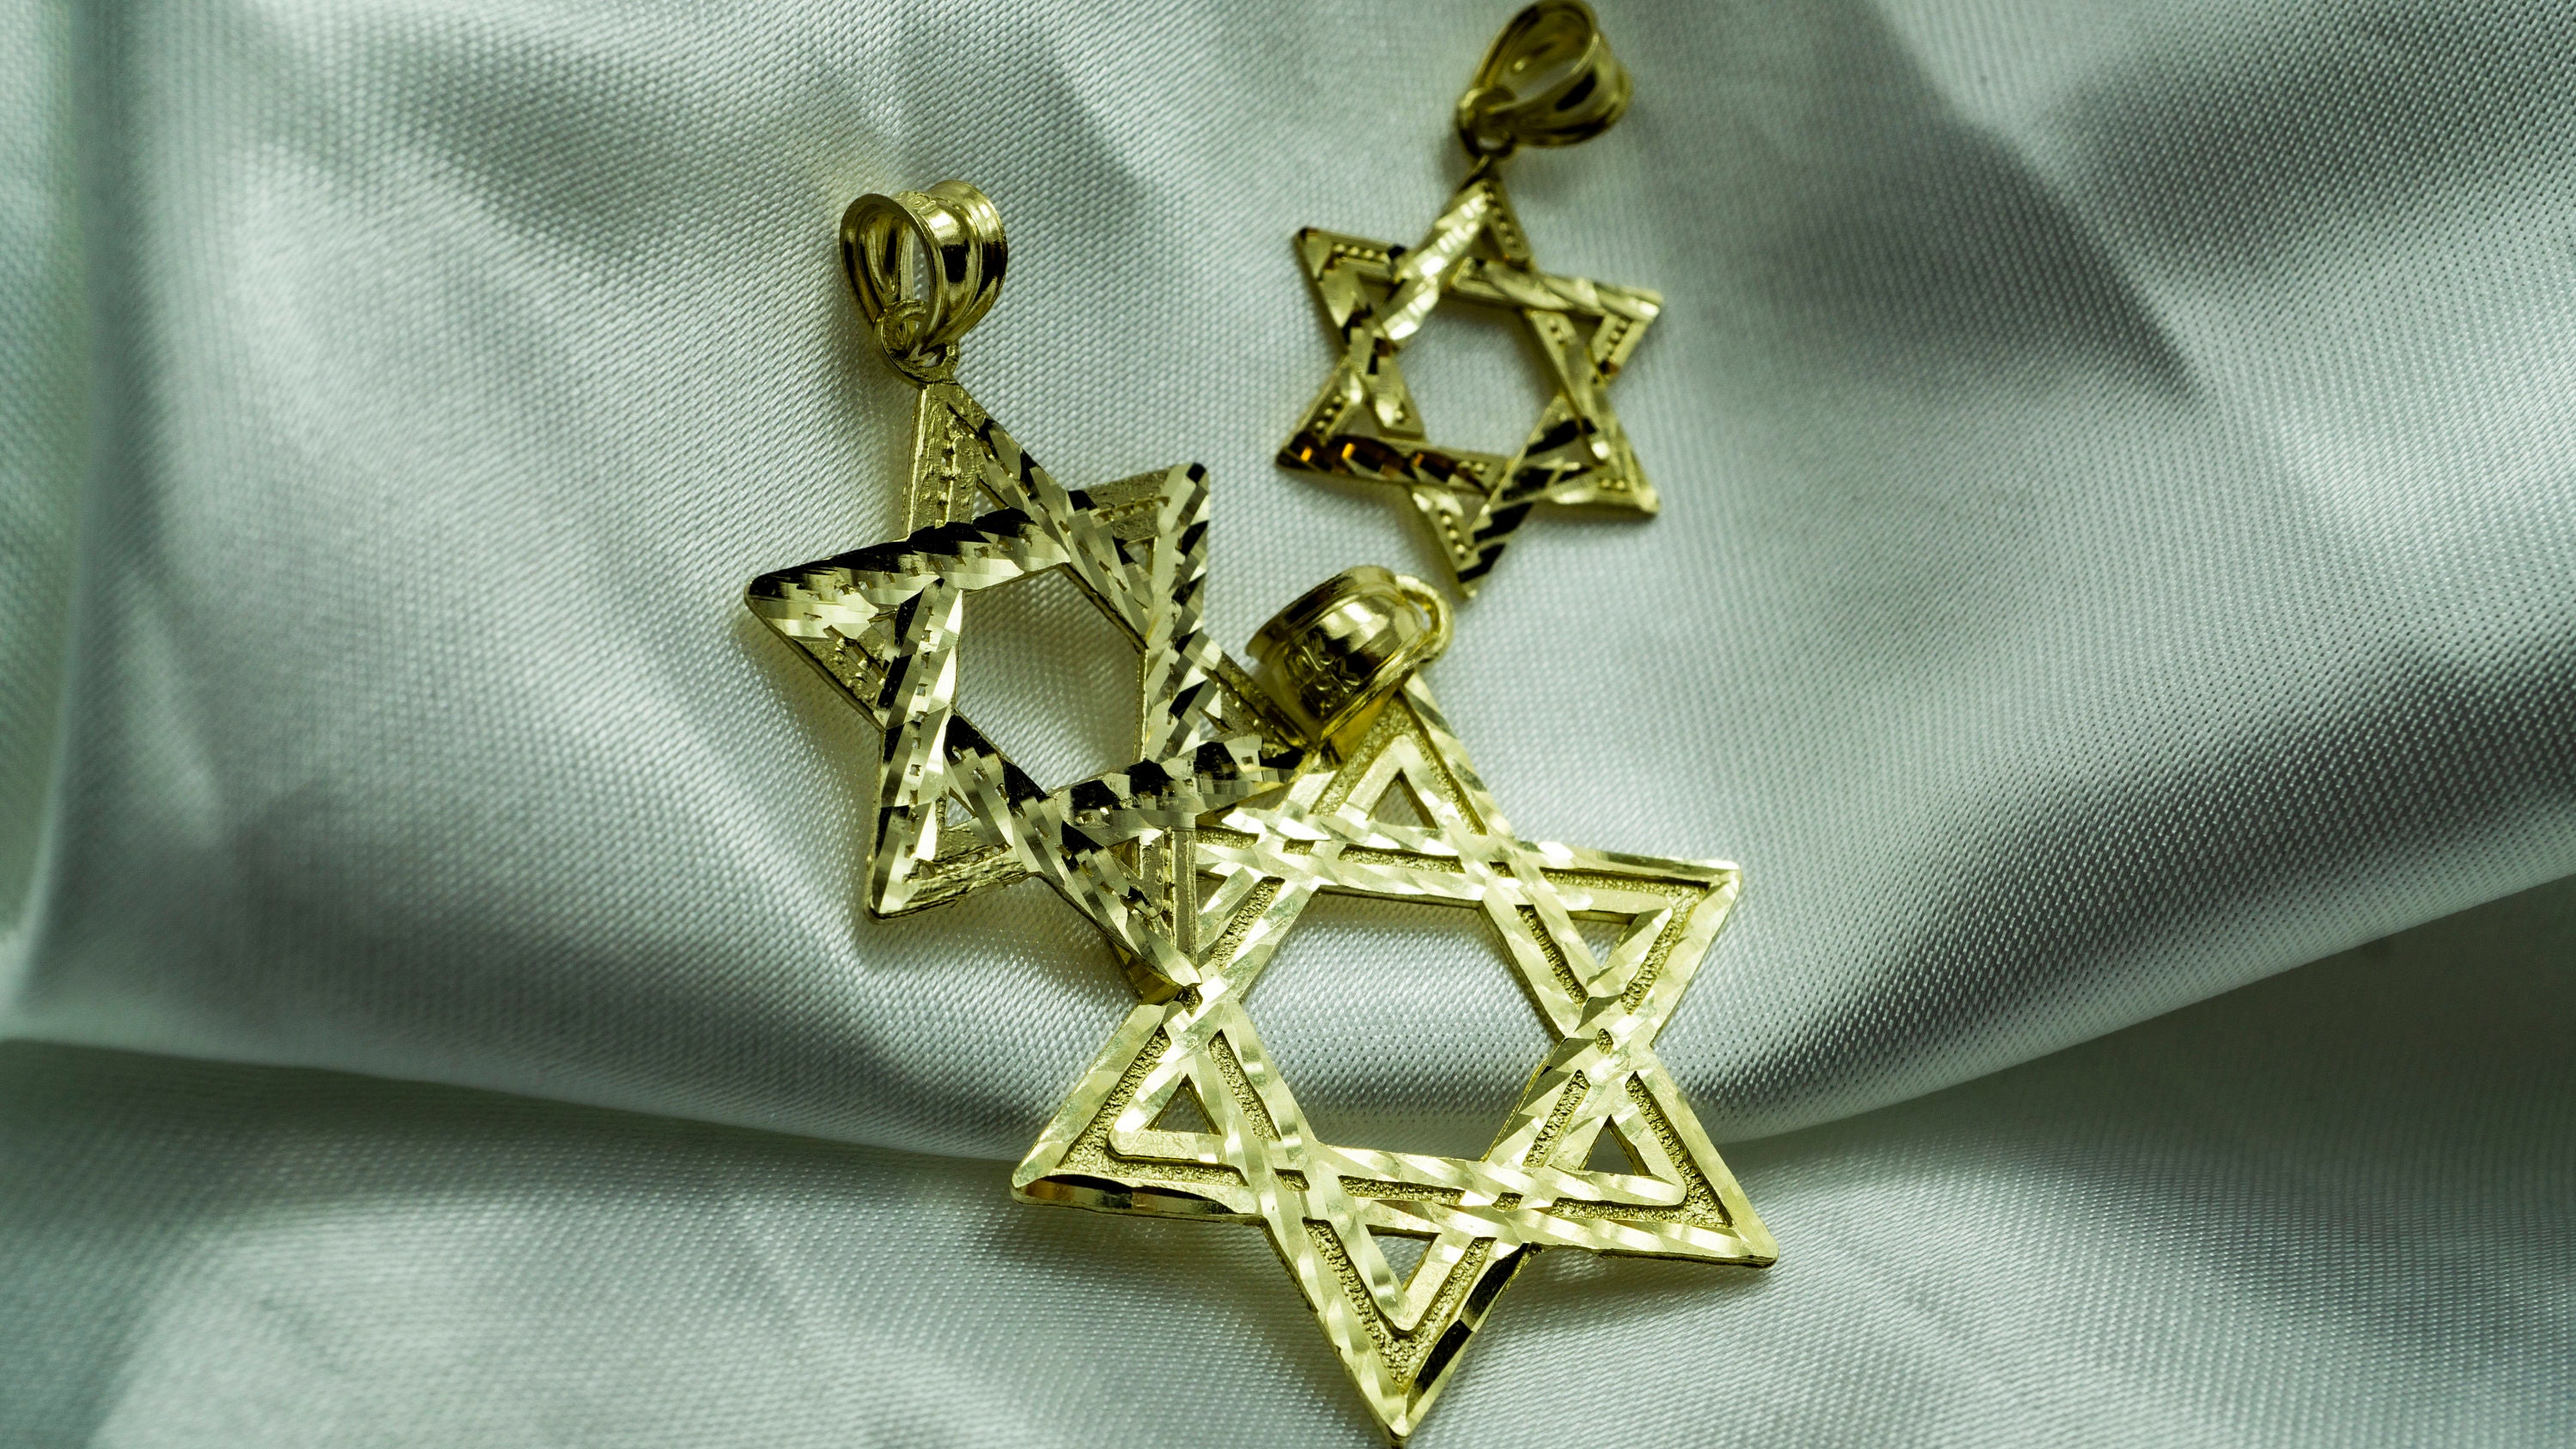 Rose Gold Diamond Star of David Necklace 16 14K Single Cut .10ctw Judaica Faith